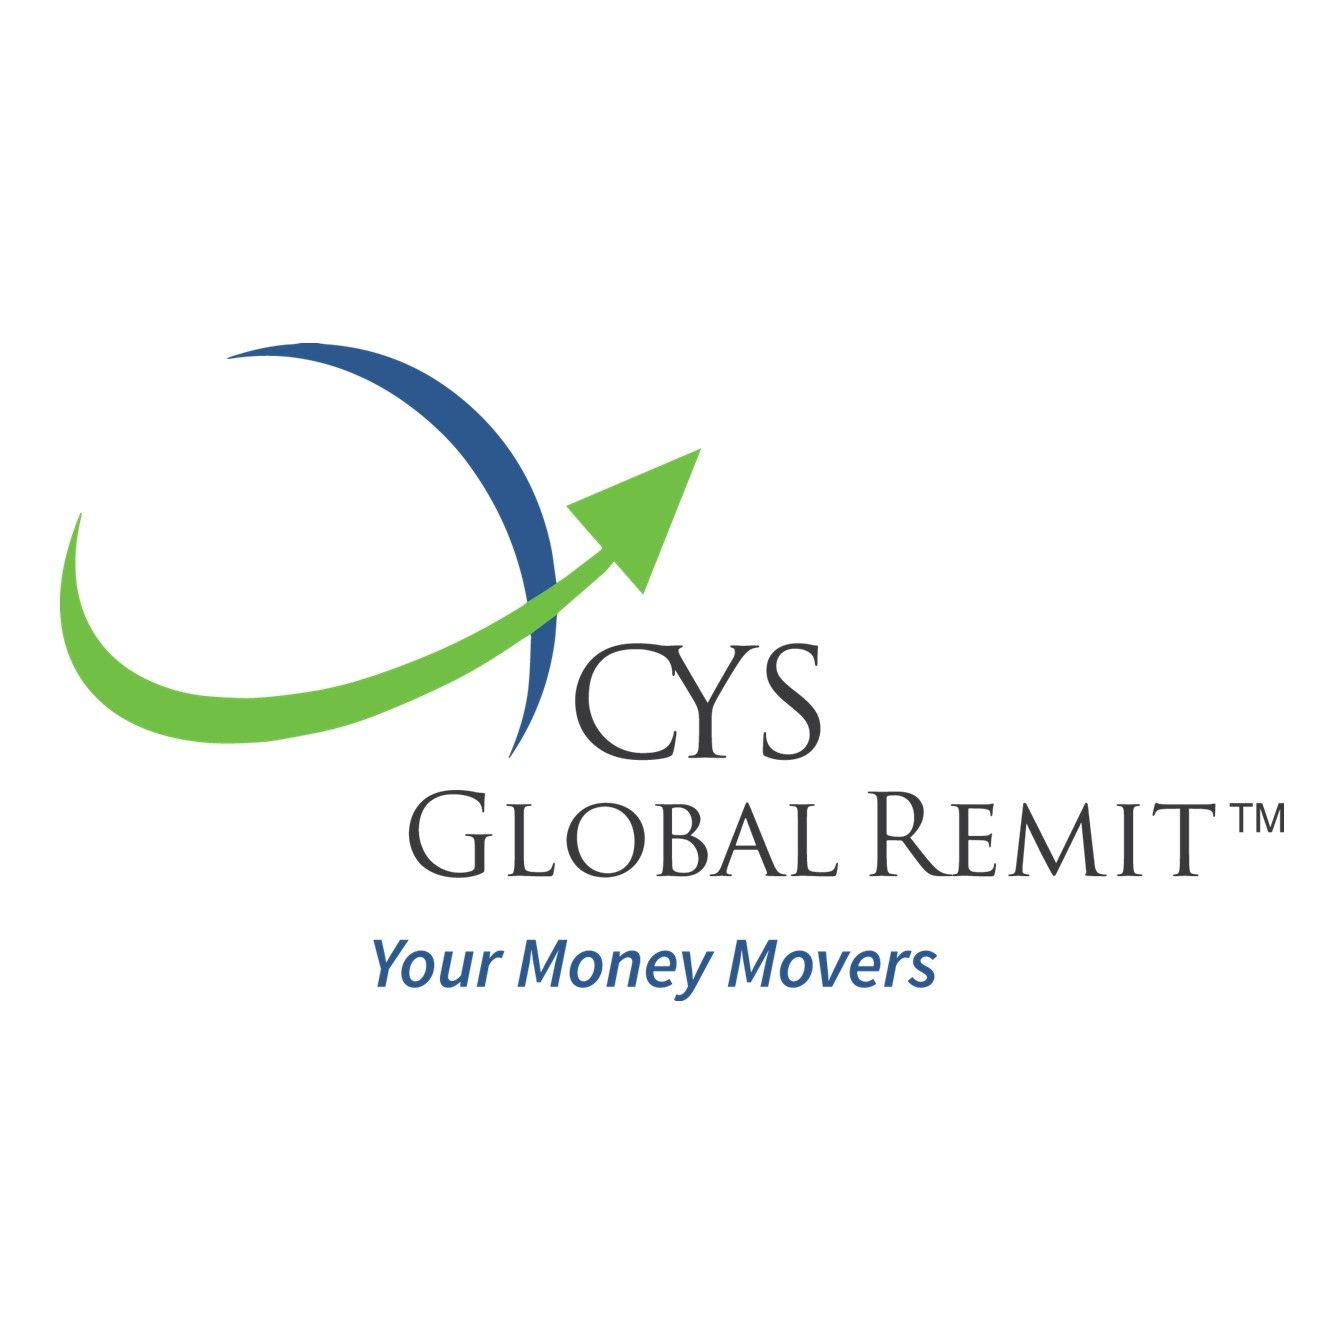 CYS Global Remit Pte Ltd